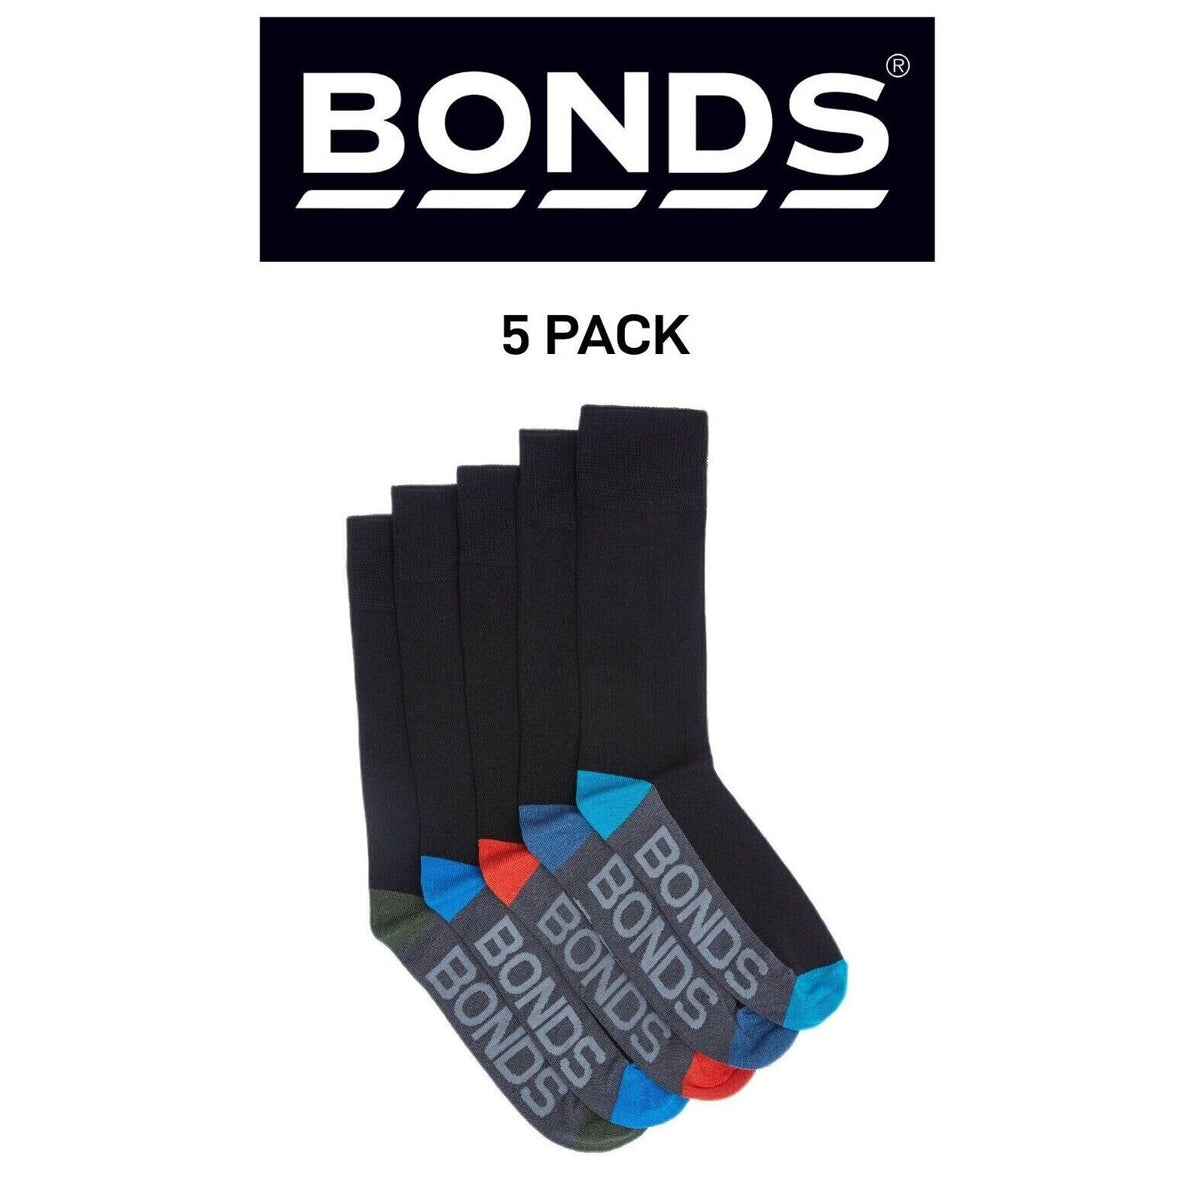 Bonds Mens Bamboo Crew Socks Reinforced Heel & Toe for Durability 5 Pack SZFQ5W